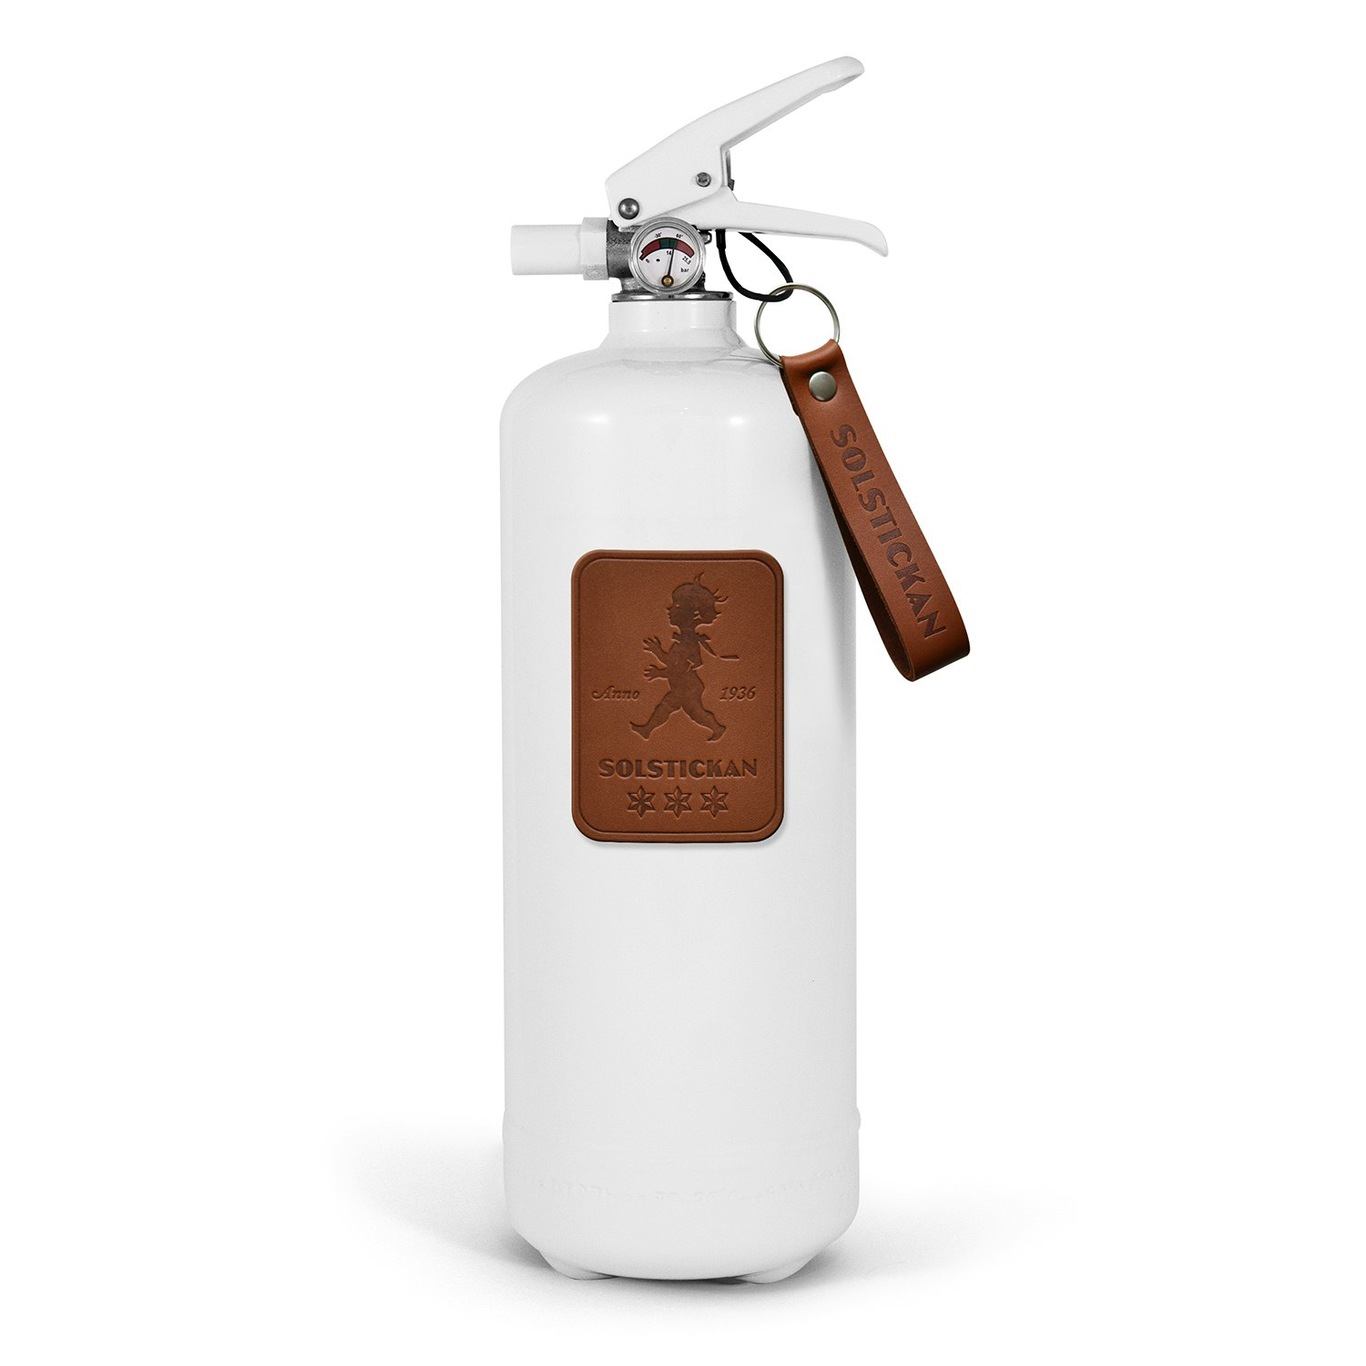 Solstickan Fire Extinguisher 2 kg, Leather Edition/Dark Brown